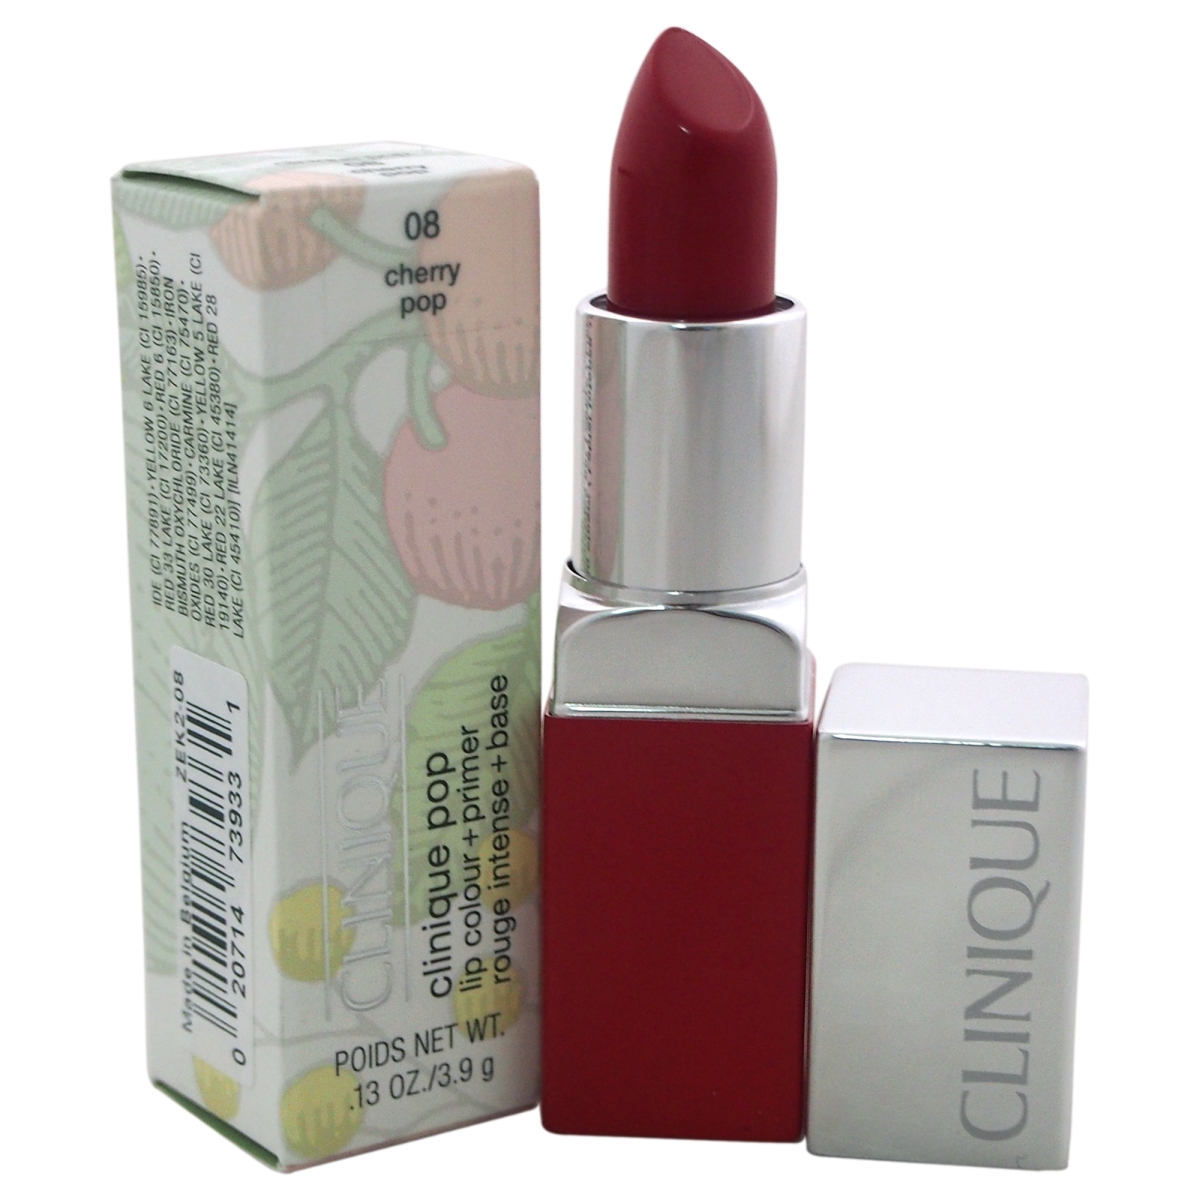 W-c-6773 0.13 Oz No. 08 Cherry Pop Plus Primer Lipstick For Women